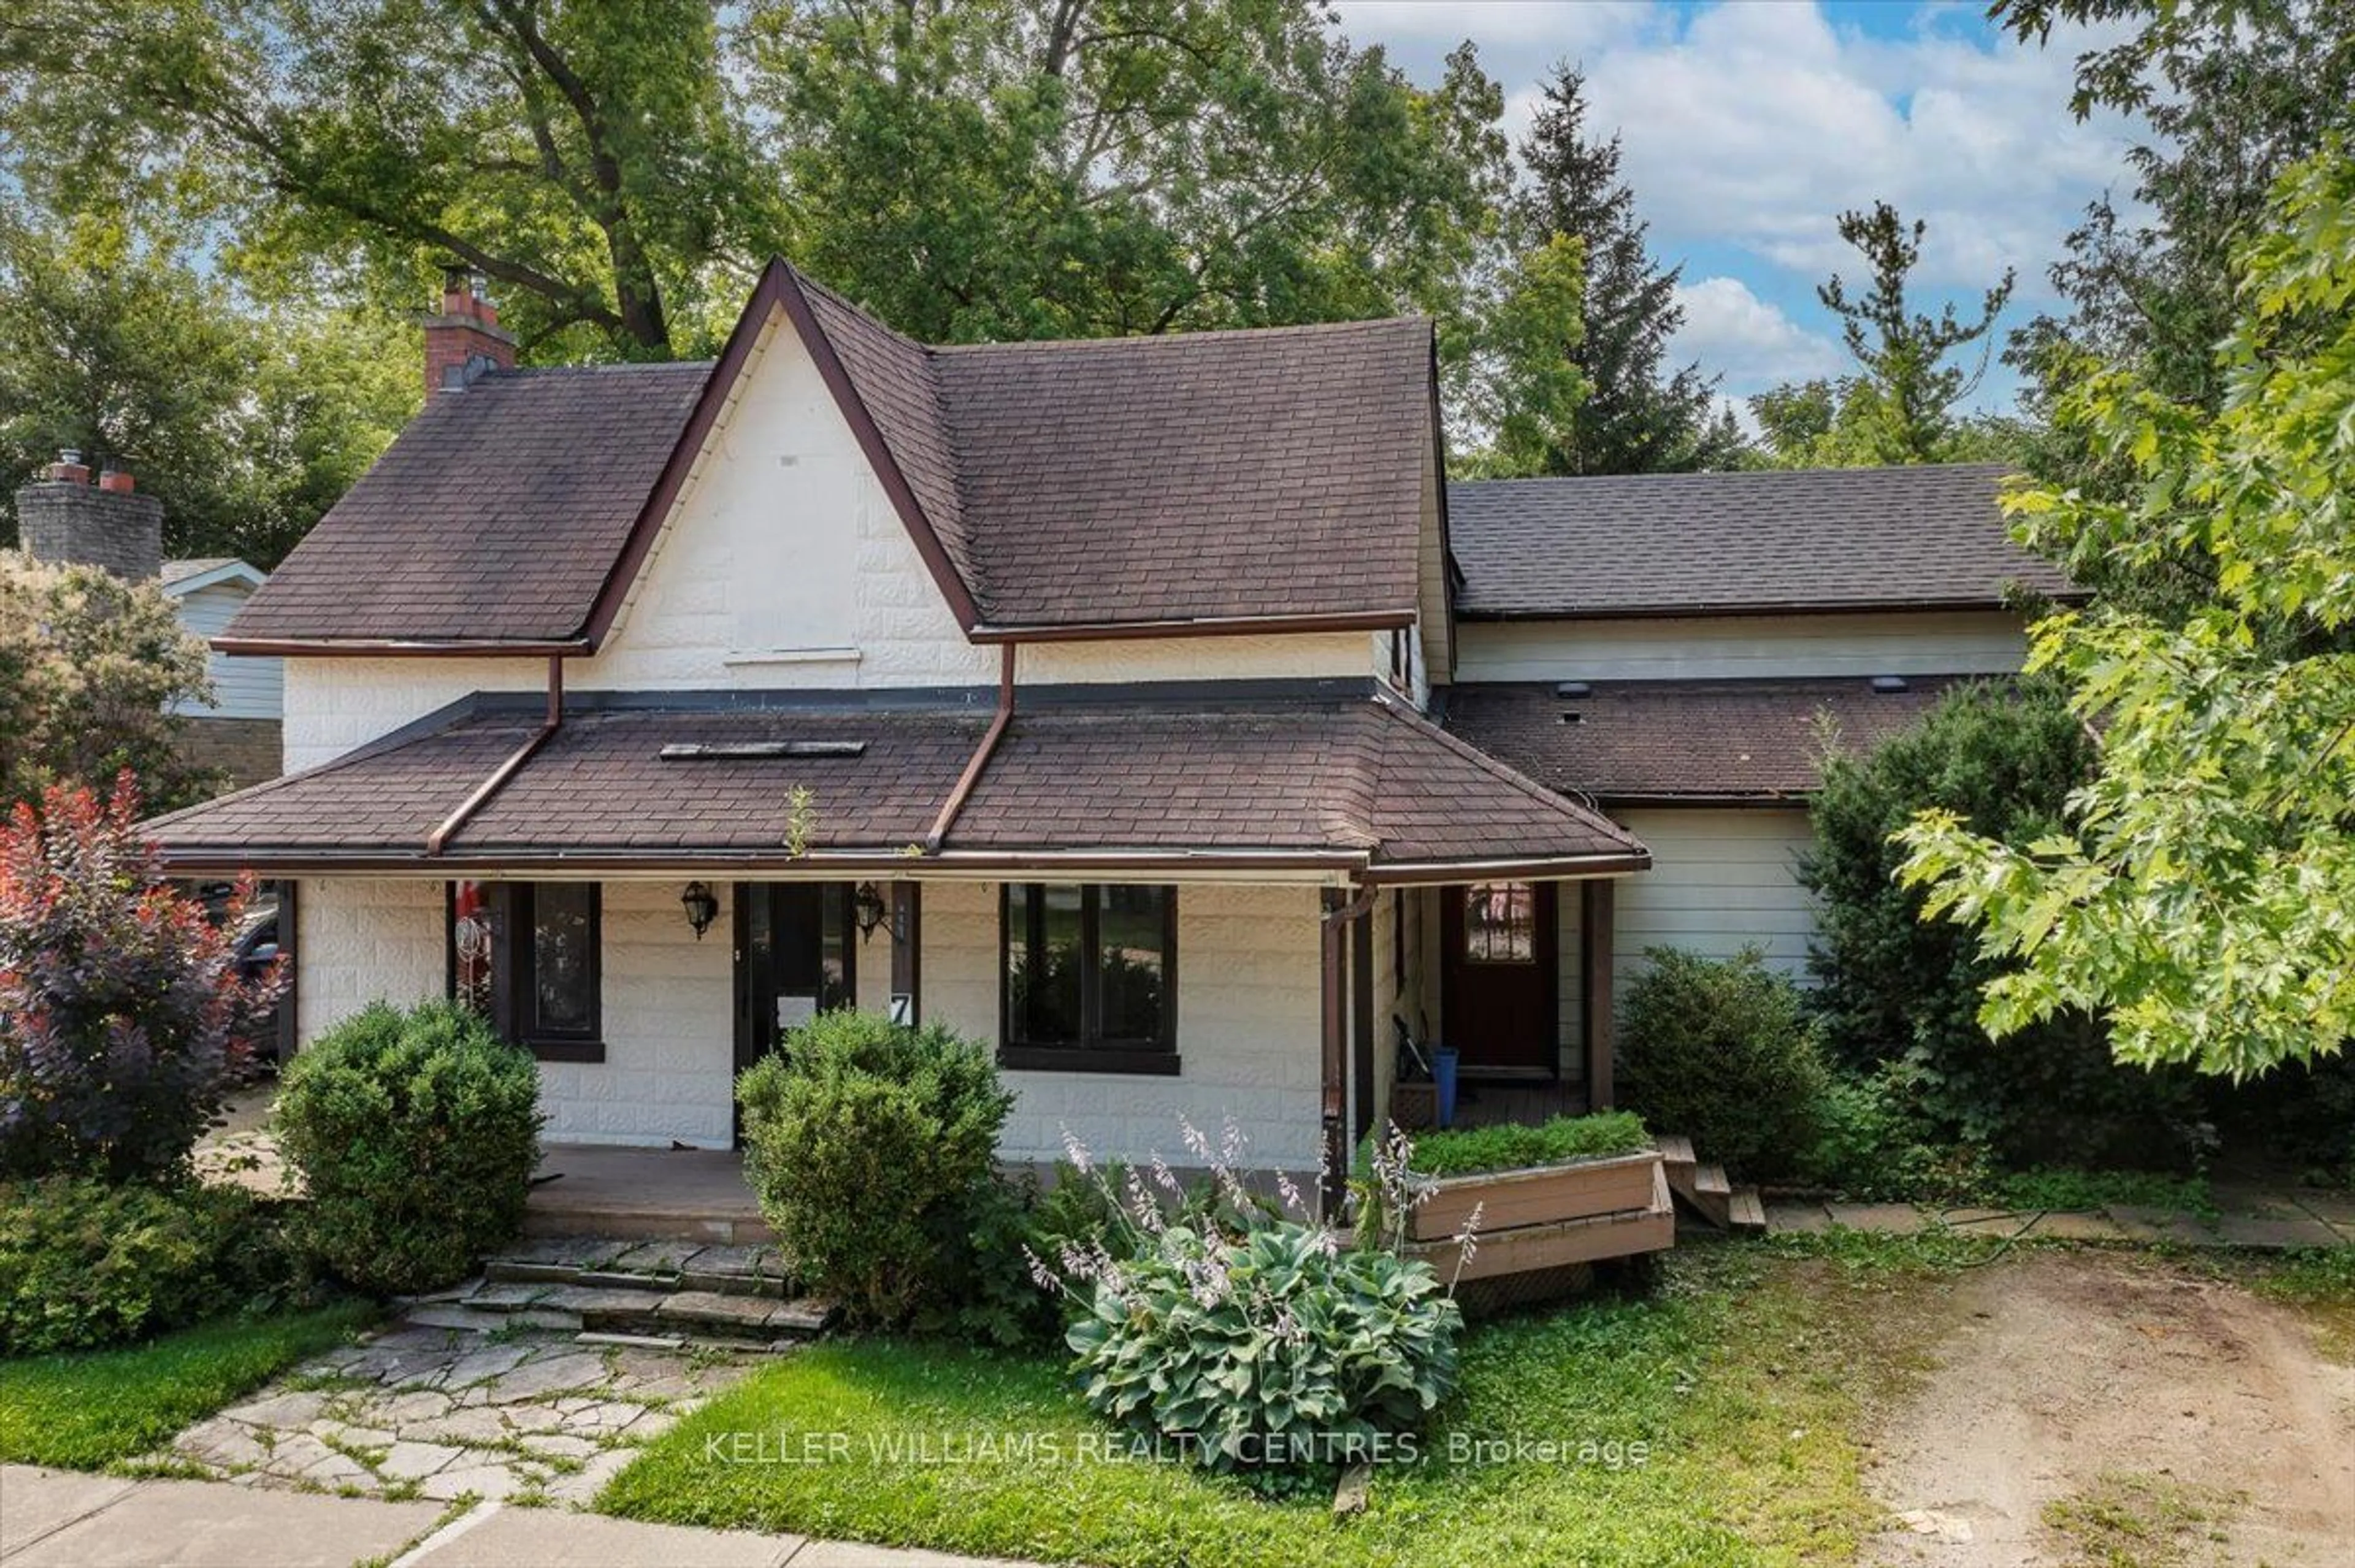 Cottage for 7 Richmond St, New Tecumseth Ontario L0G 1W0